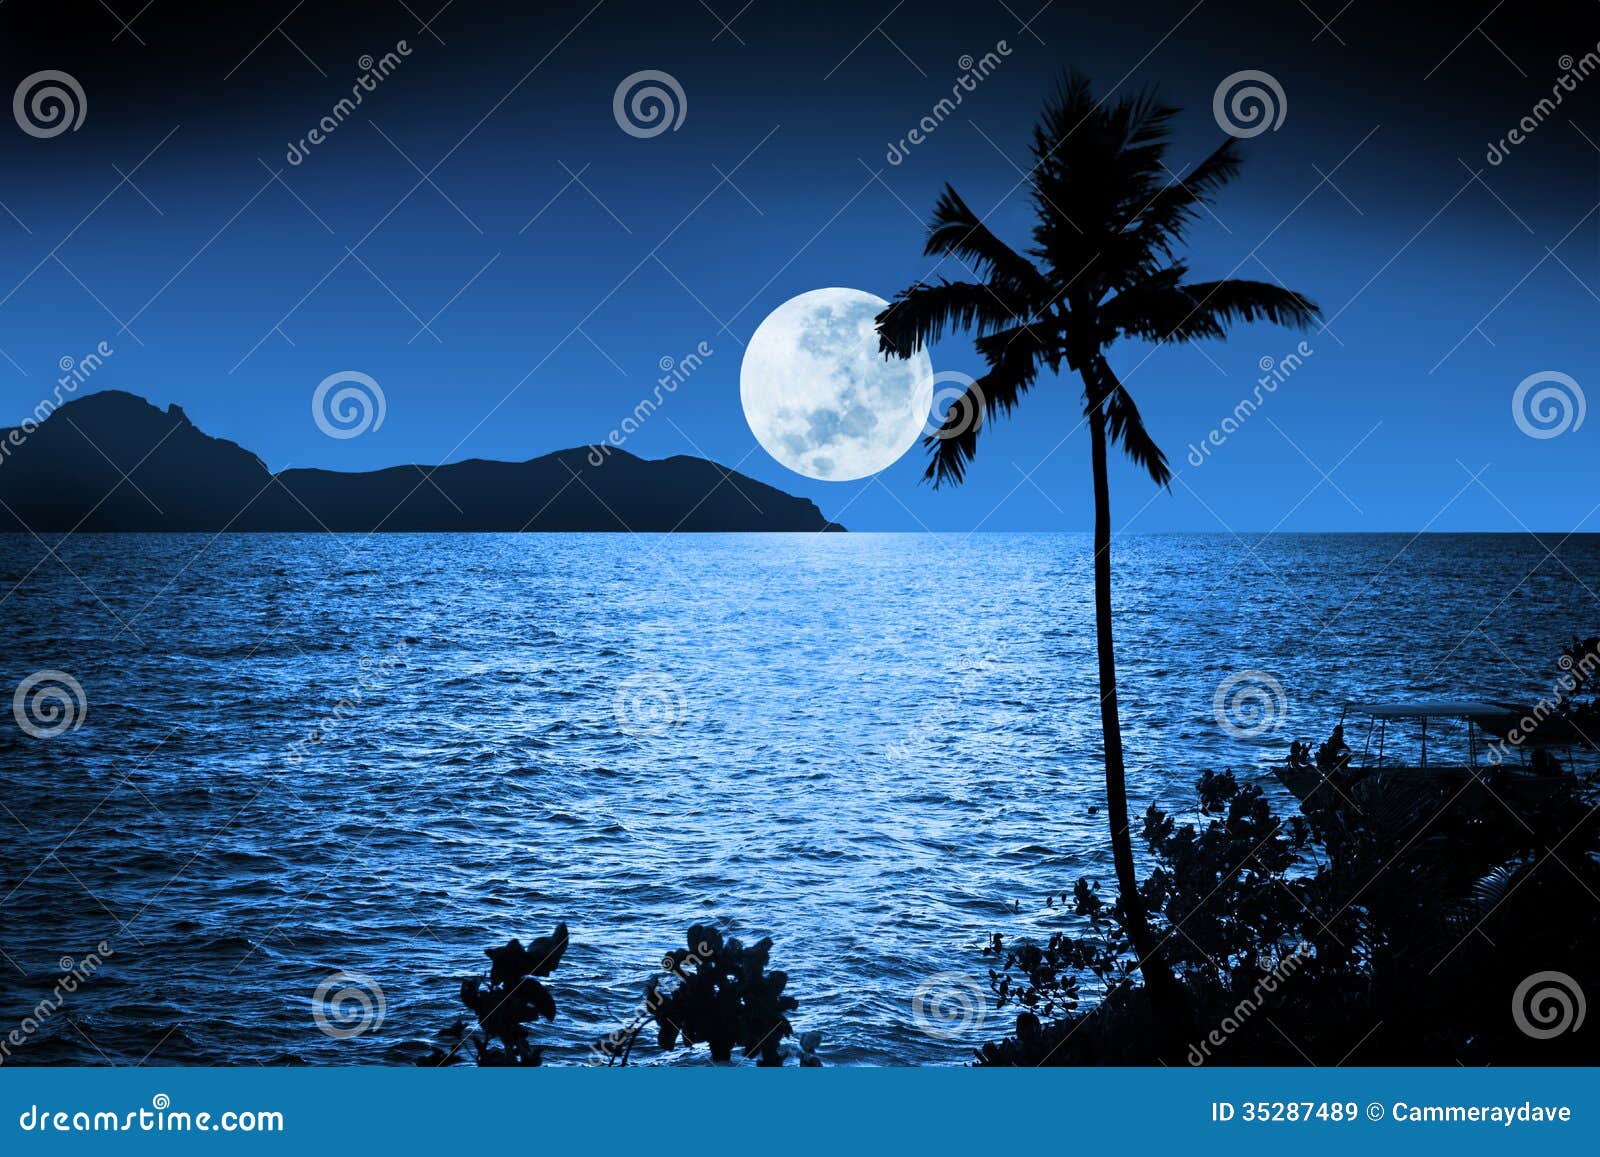 ocean night moon sky tropical